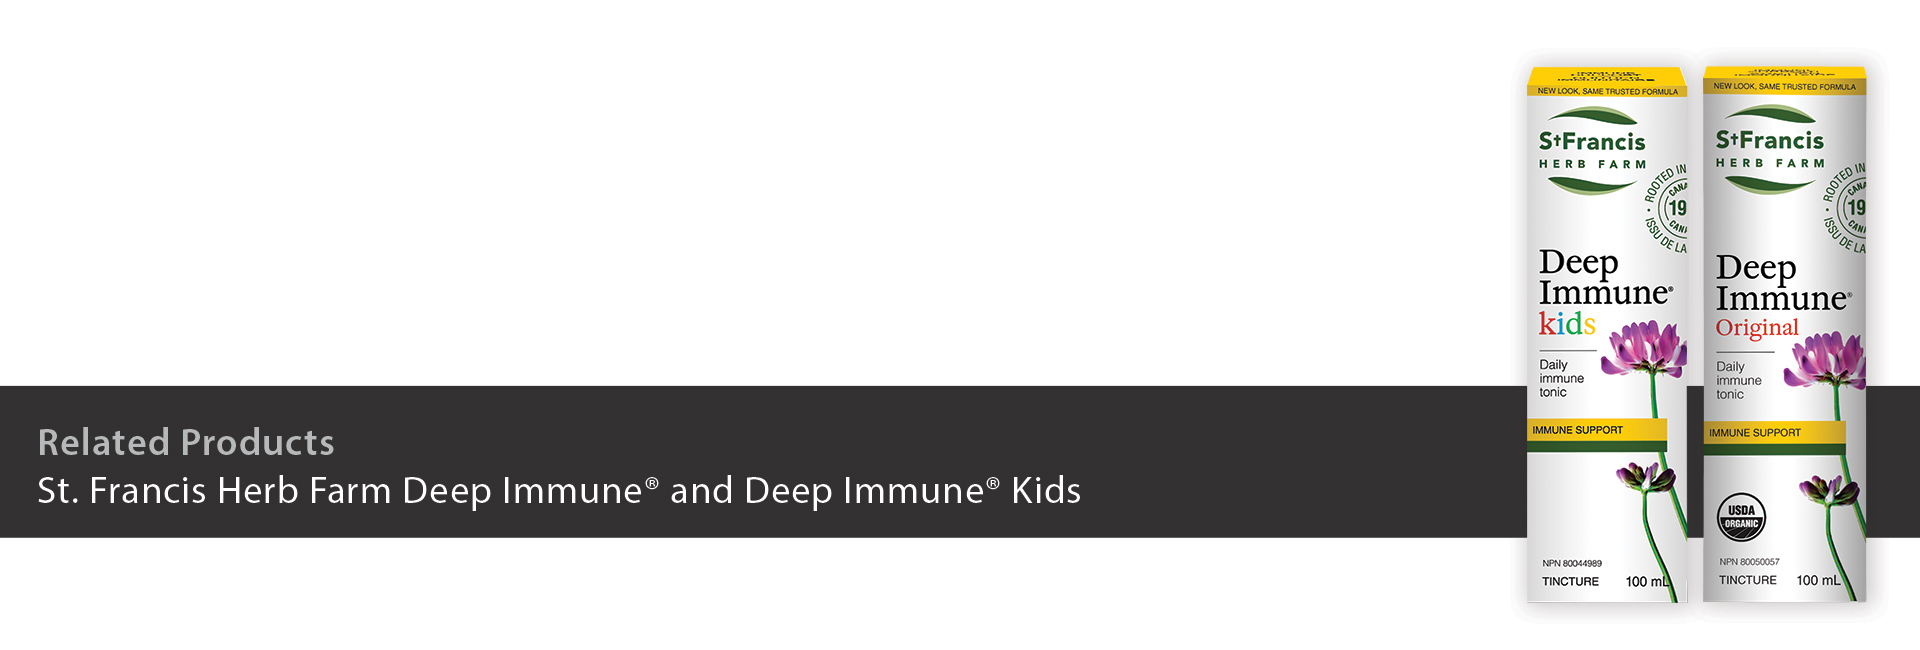 St. Francis Herb Farm Deep Immune and Deep Immune Kids